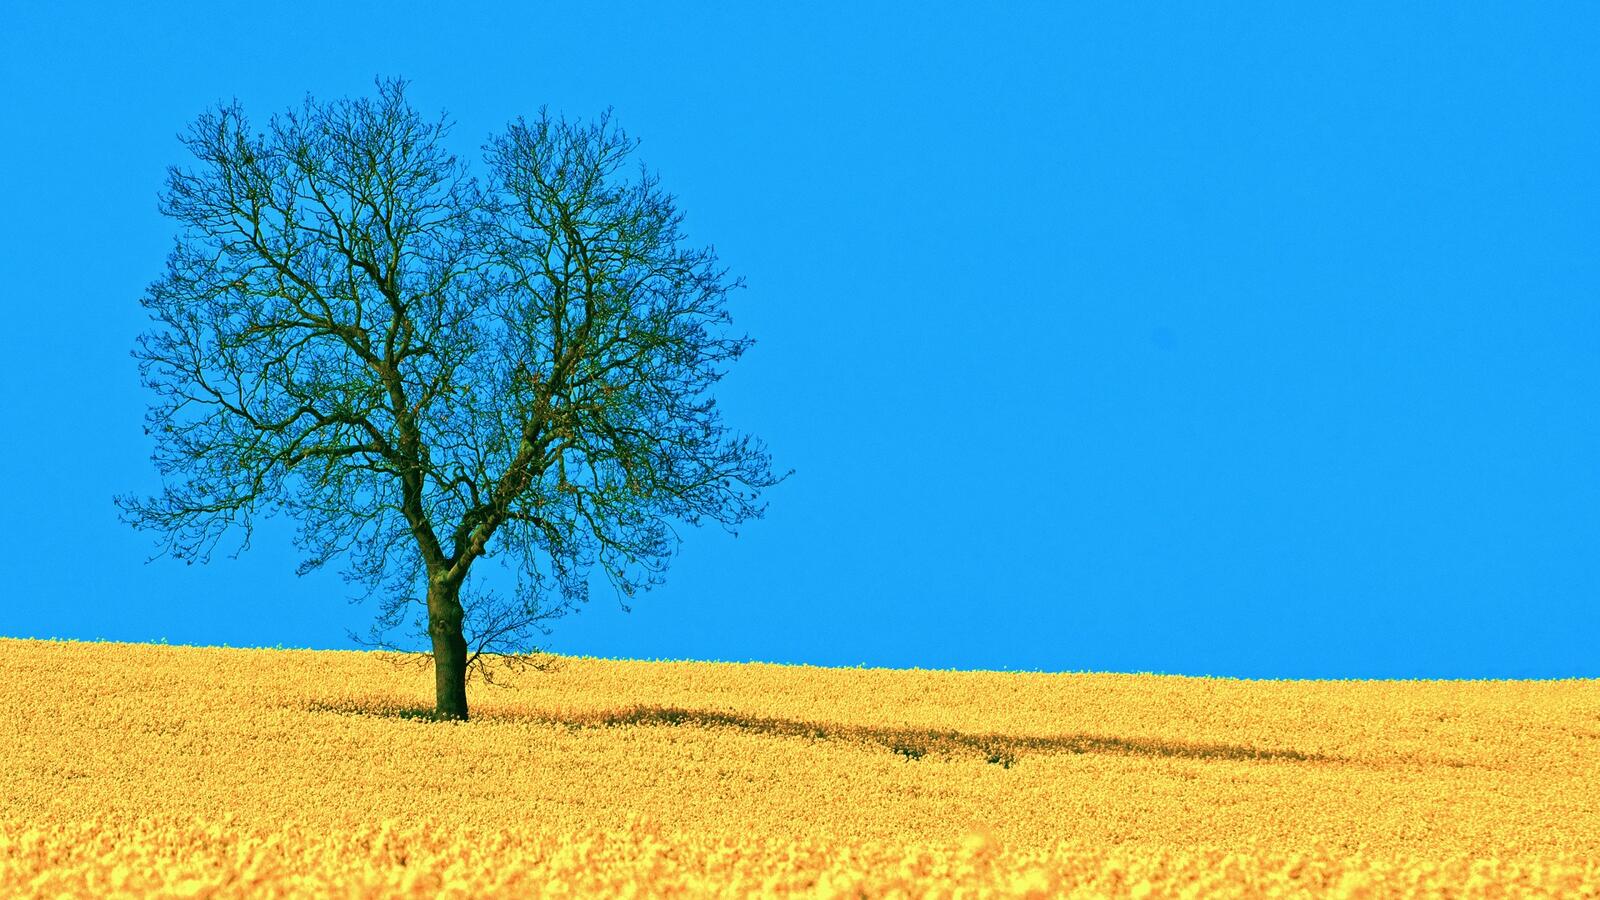 Wallpapers blue horizon landscapes on the desktop